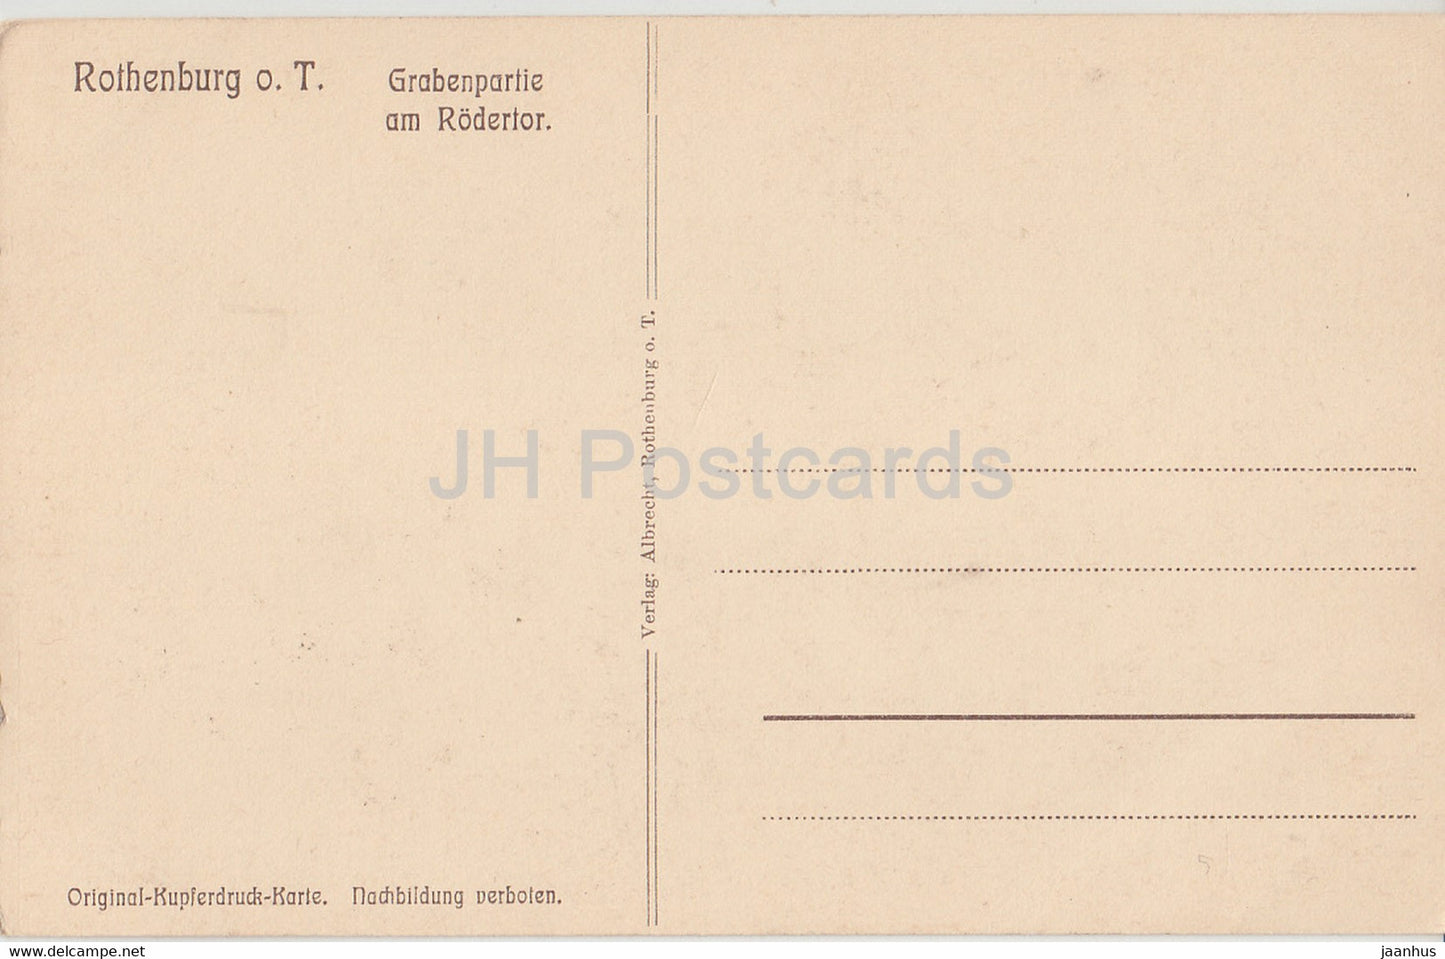 Rothenburg o d Tauber - Grabenpartie am Rodertor - old postcard - Germany - unused